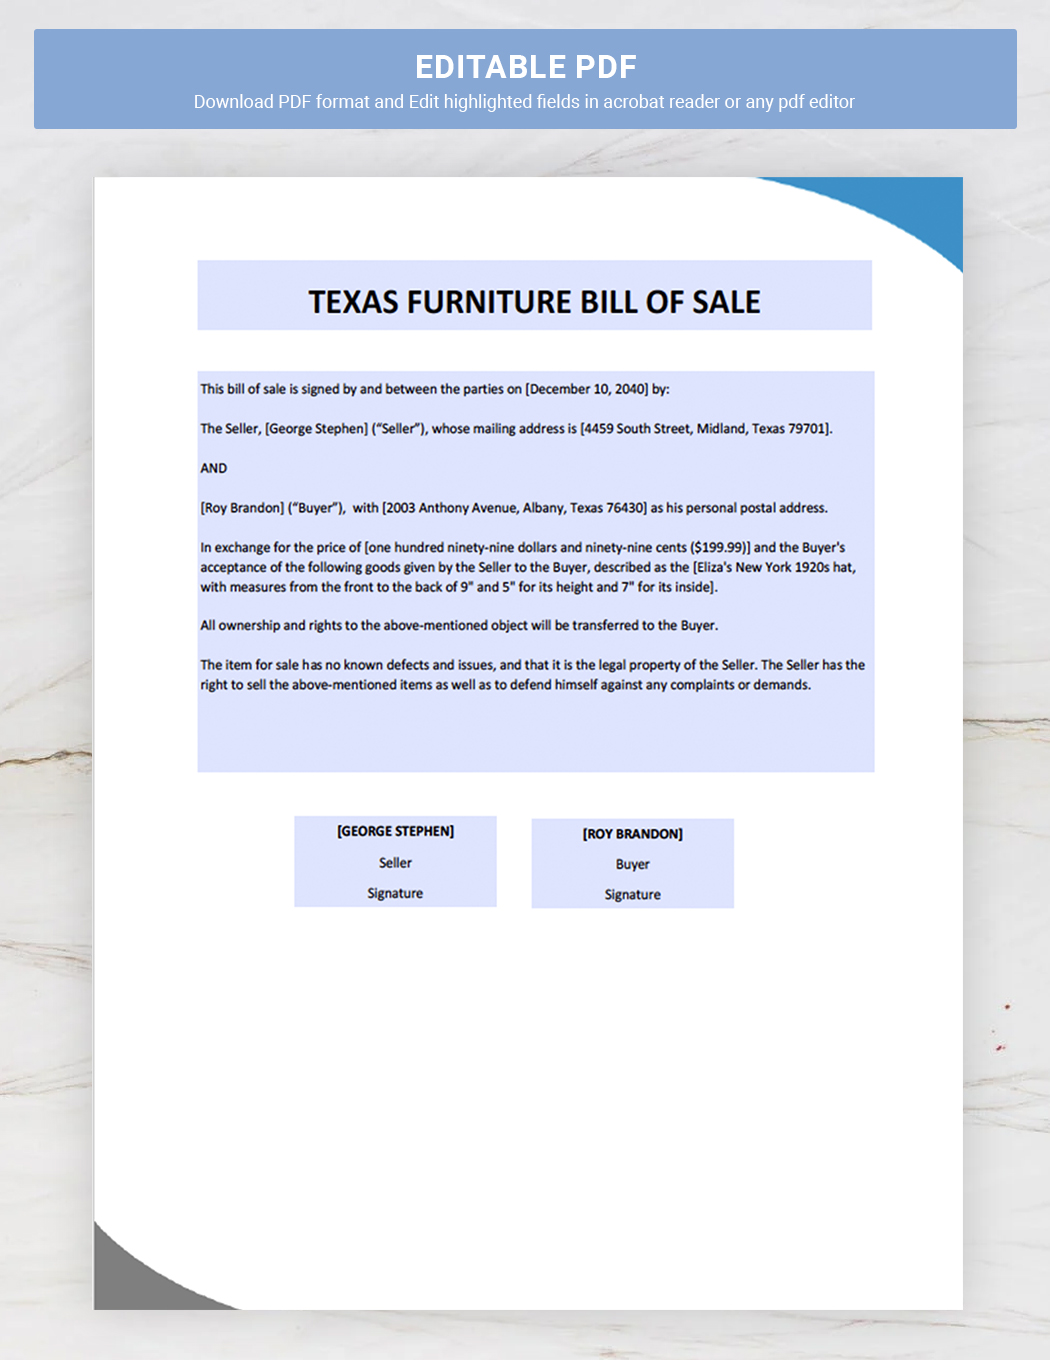 Texas Furniture Bill of Sale Template